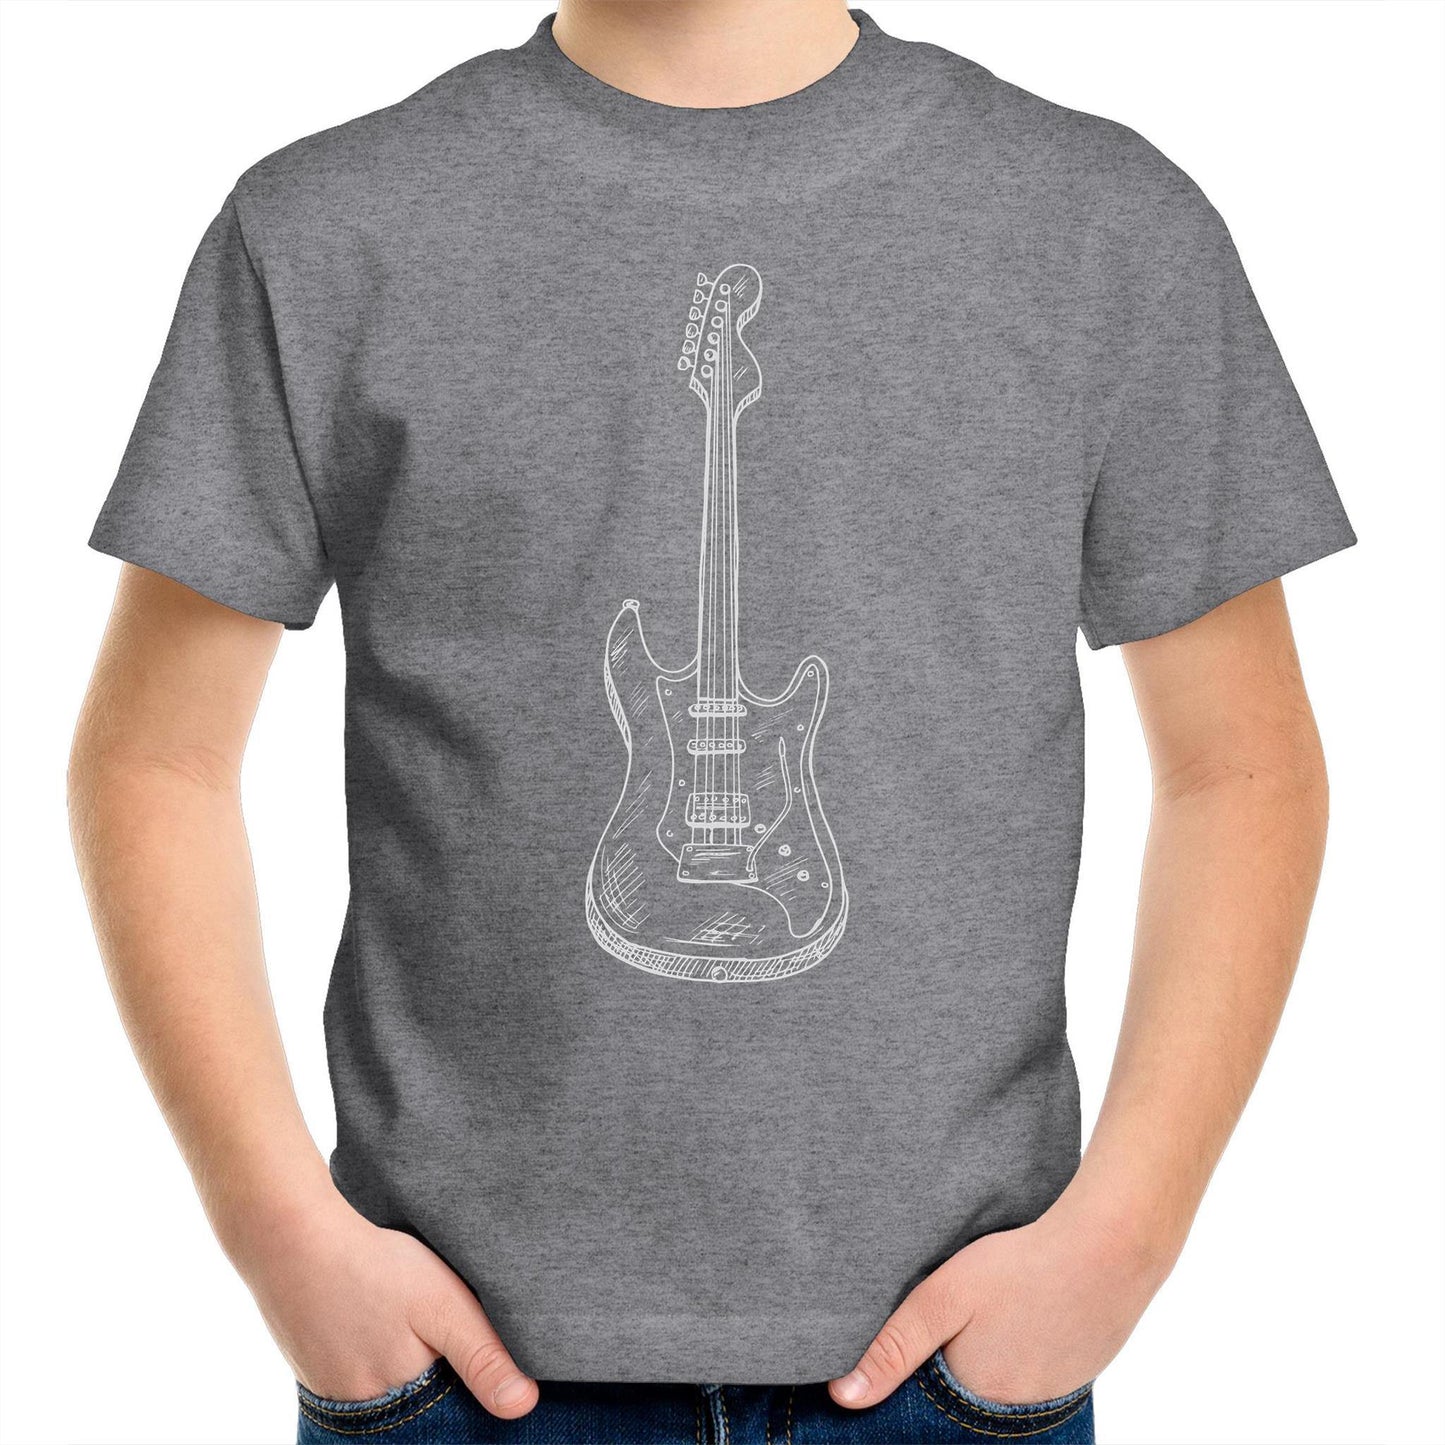 Guitar - Kids Youth Crew T-Shirt Grey Marle Kids Youth T-shirt Music